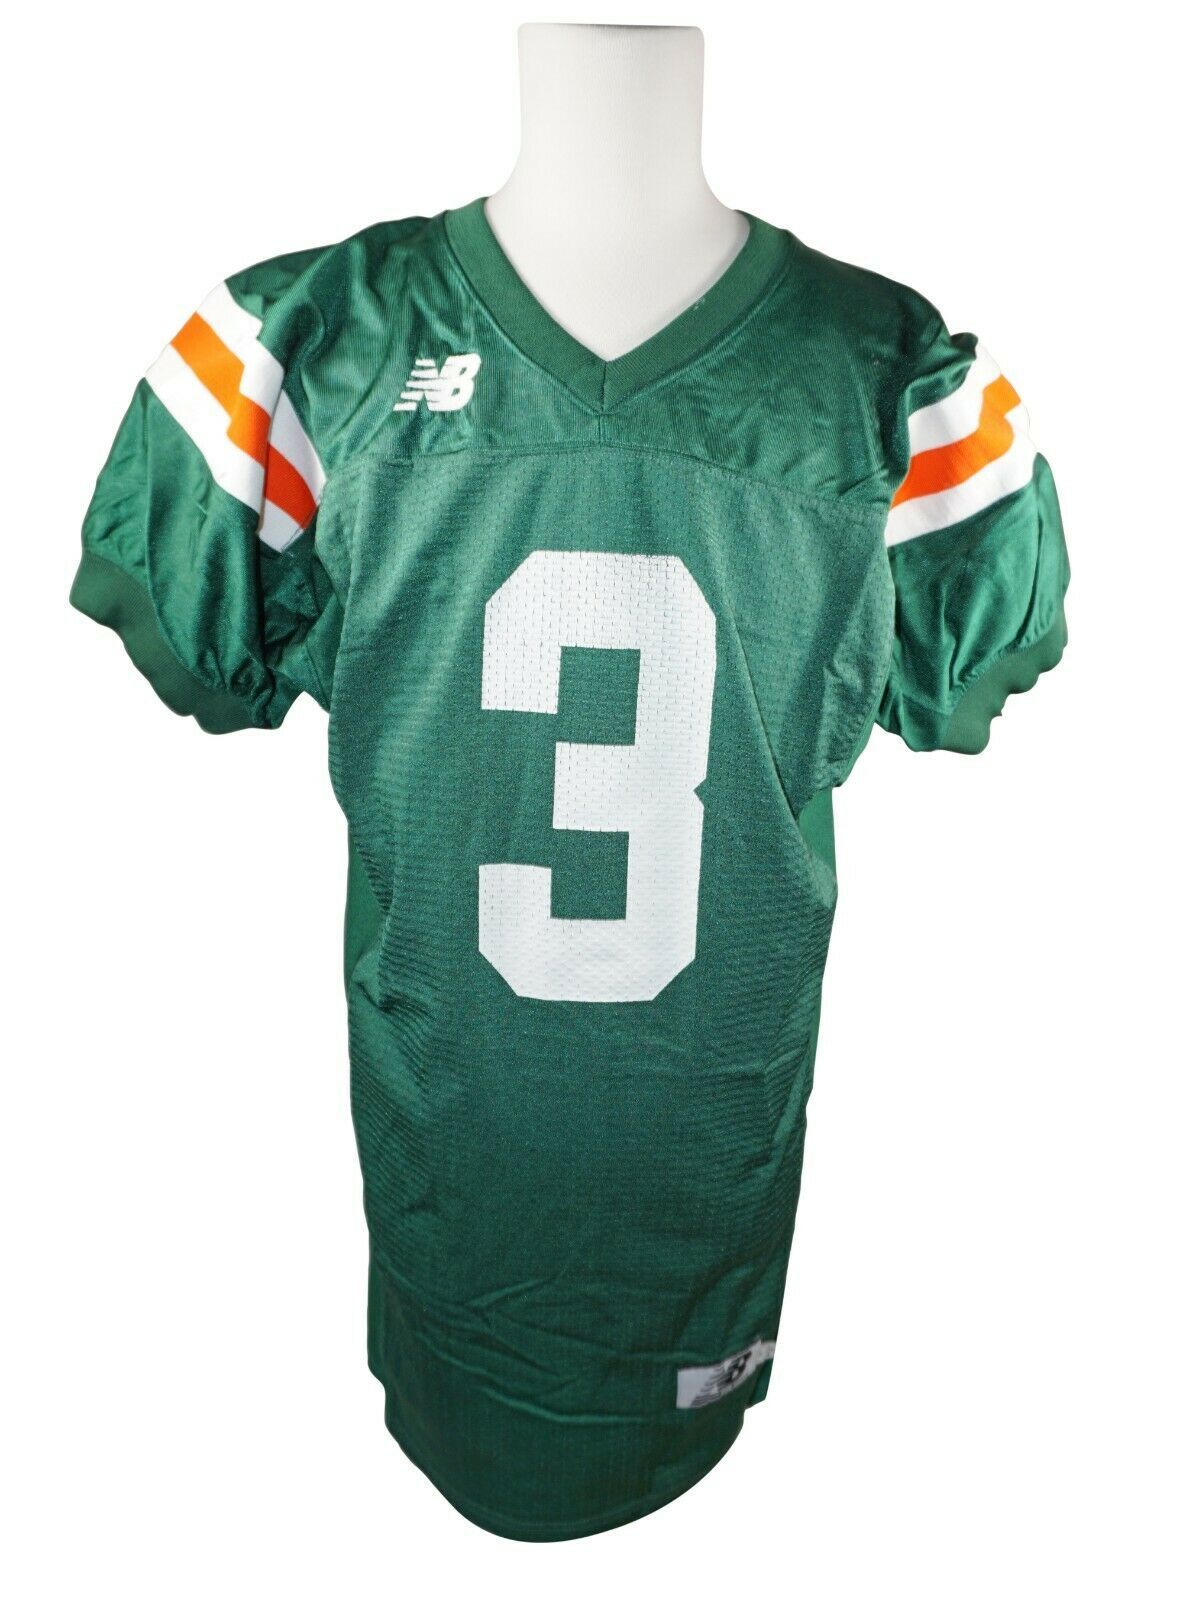 New Balance Adult Green Football - Team Jersey #3 Shirt Medium +2" Extra Long - $30.00